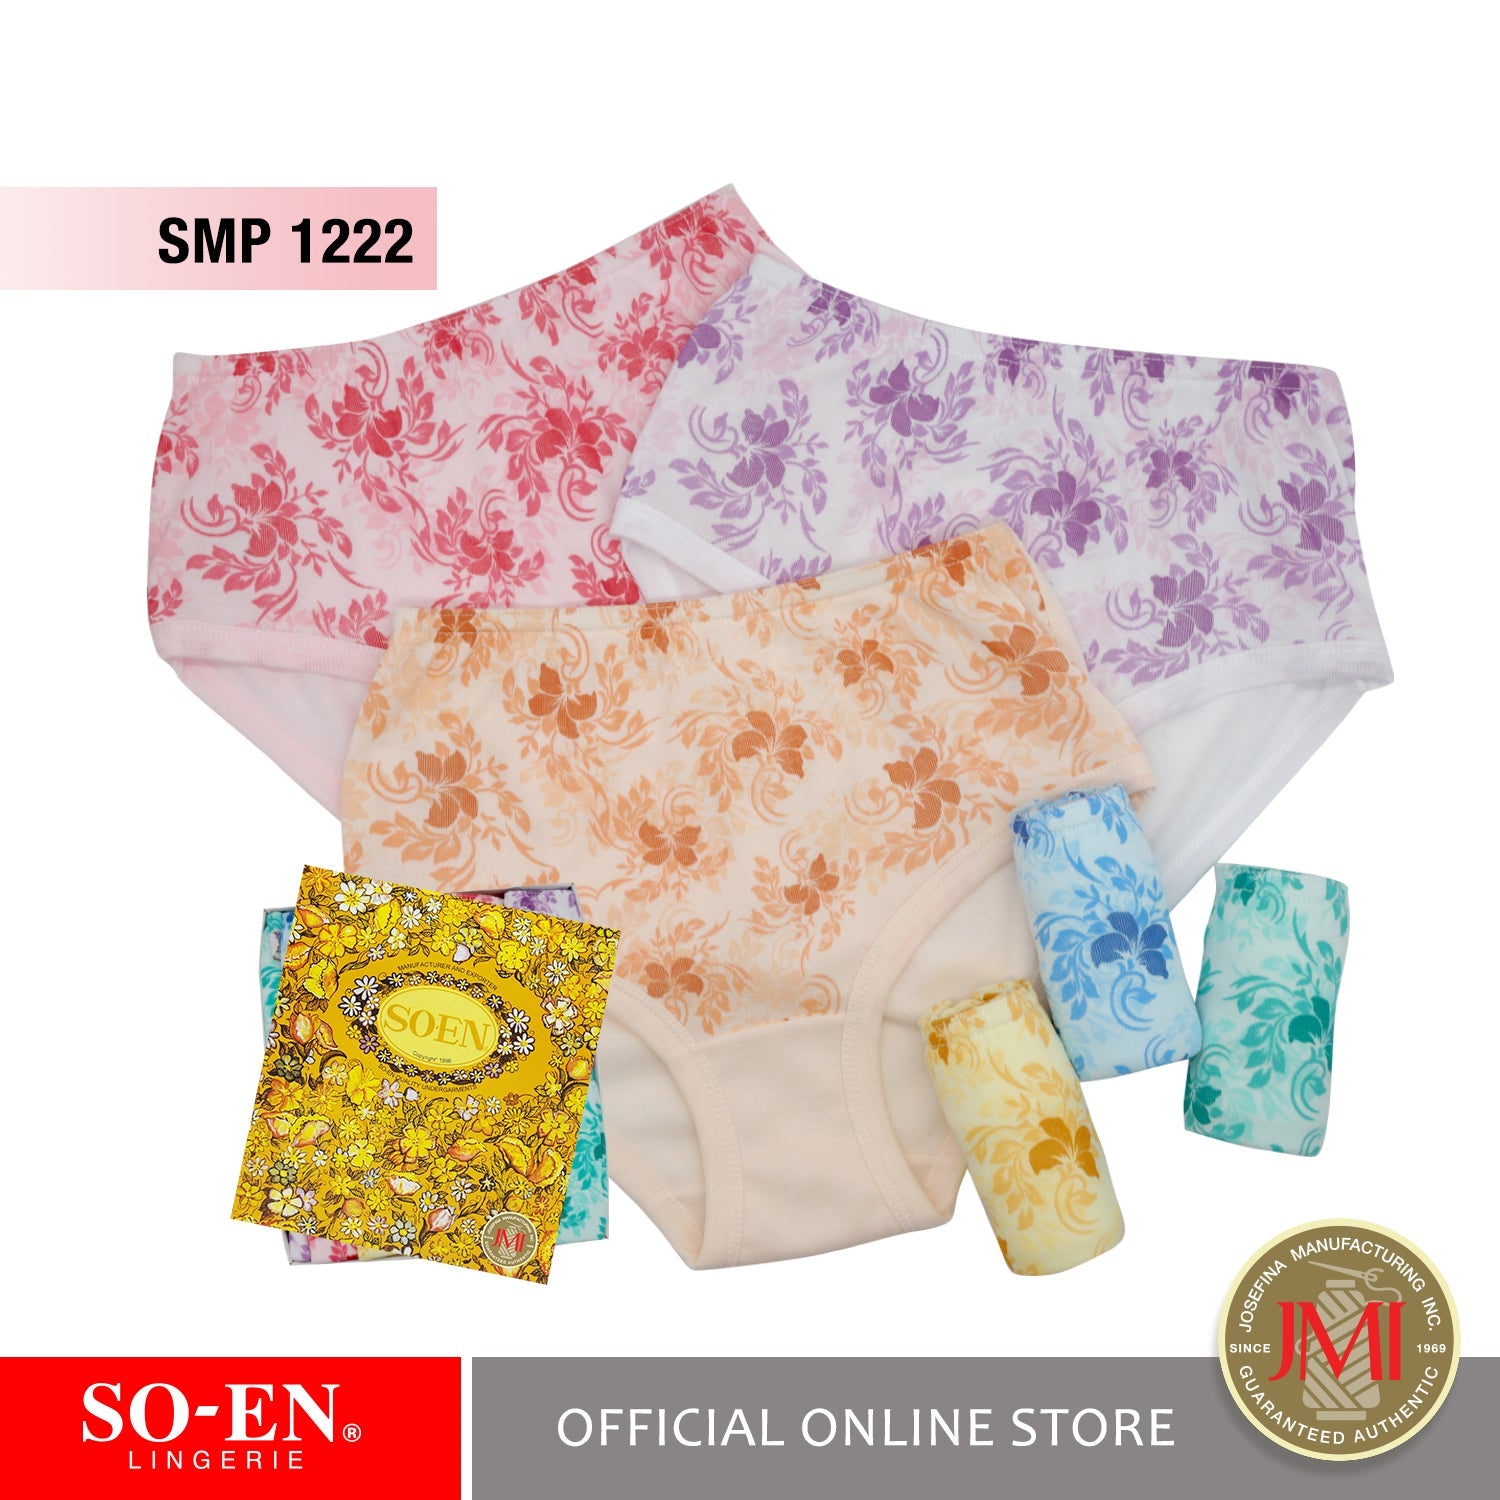 SOEN SO-EN Ladies Women’s Panties Semi-Panty Size XL Flower Design  Embroidery Pastel Colors, Box of 12